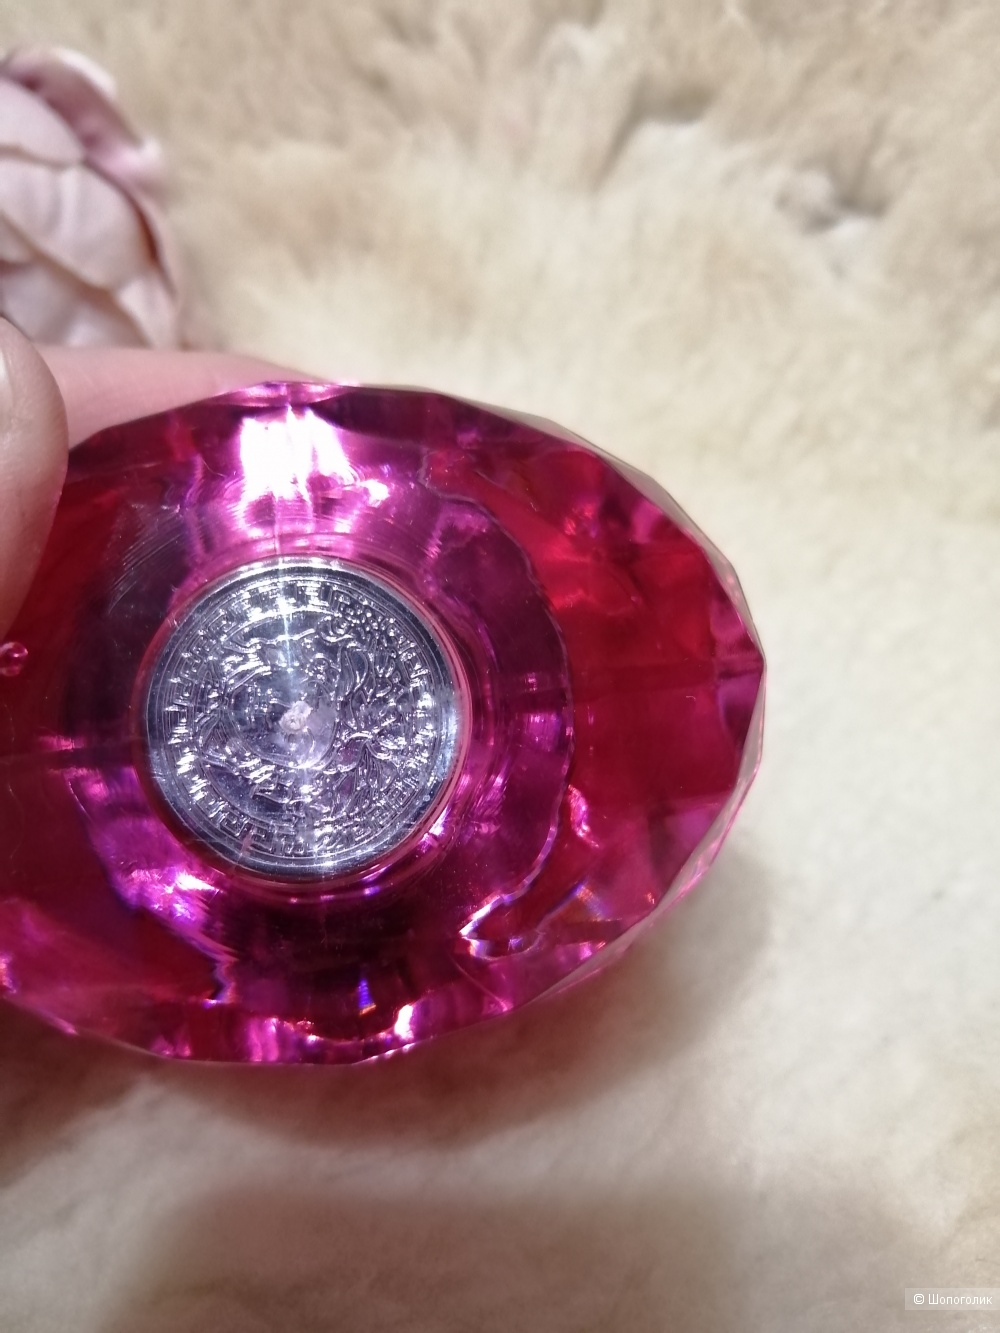 Парфюм Versace Bright "Crystal Absolu" for woman 90ml